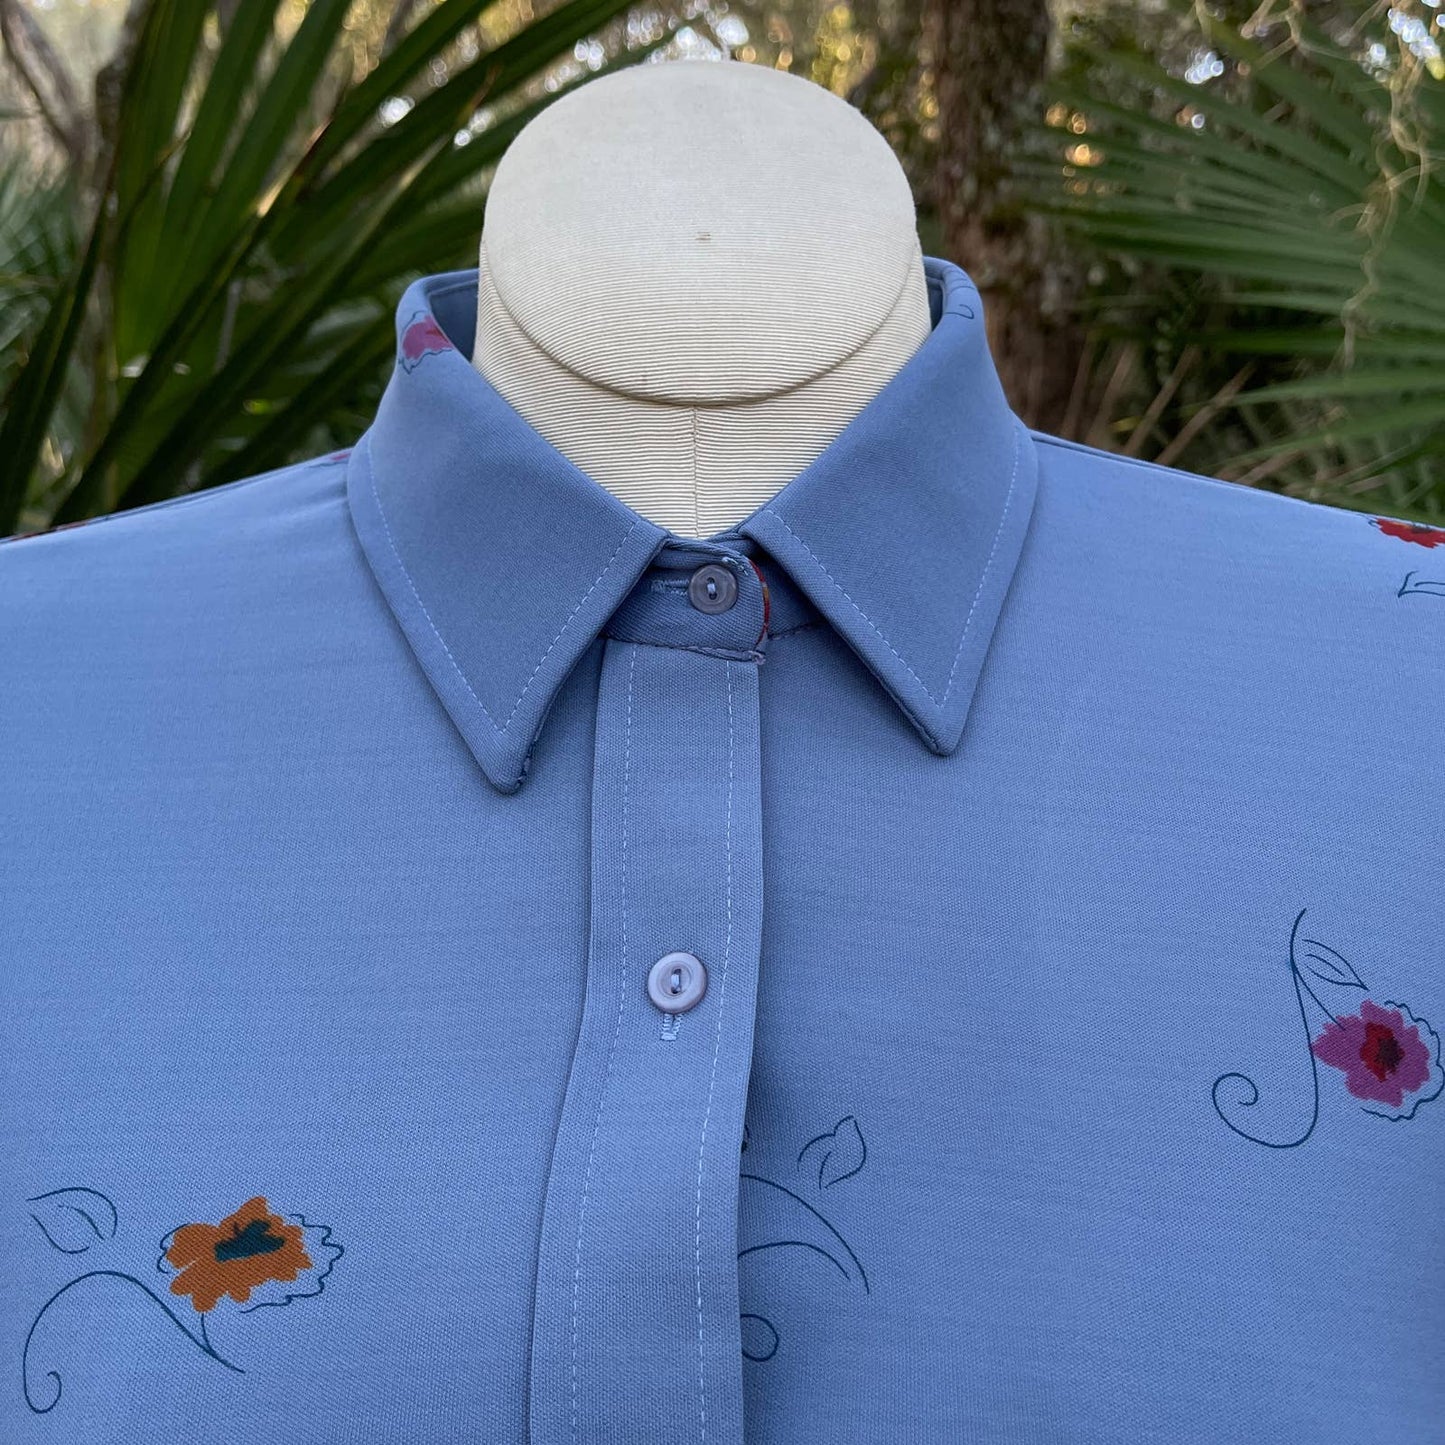 Vintage 70s Blue Floral Button Up Shirt Blouse Long Sleeves Sears Size M L